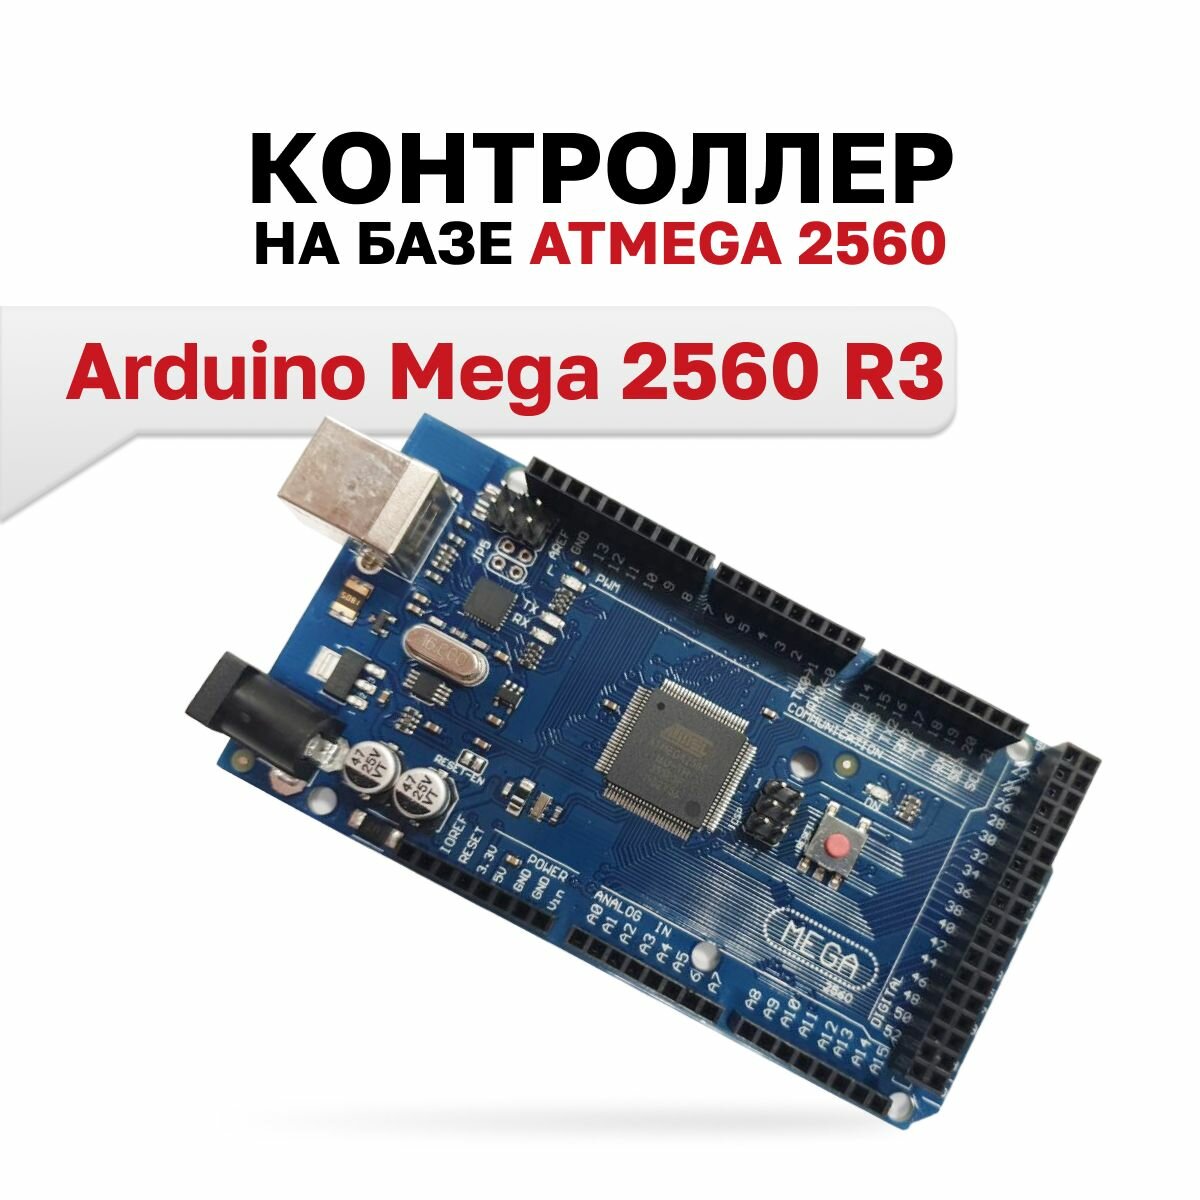 Контроллер Arduino Mega 2560 R3 с проводом